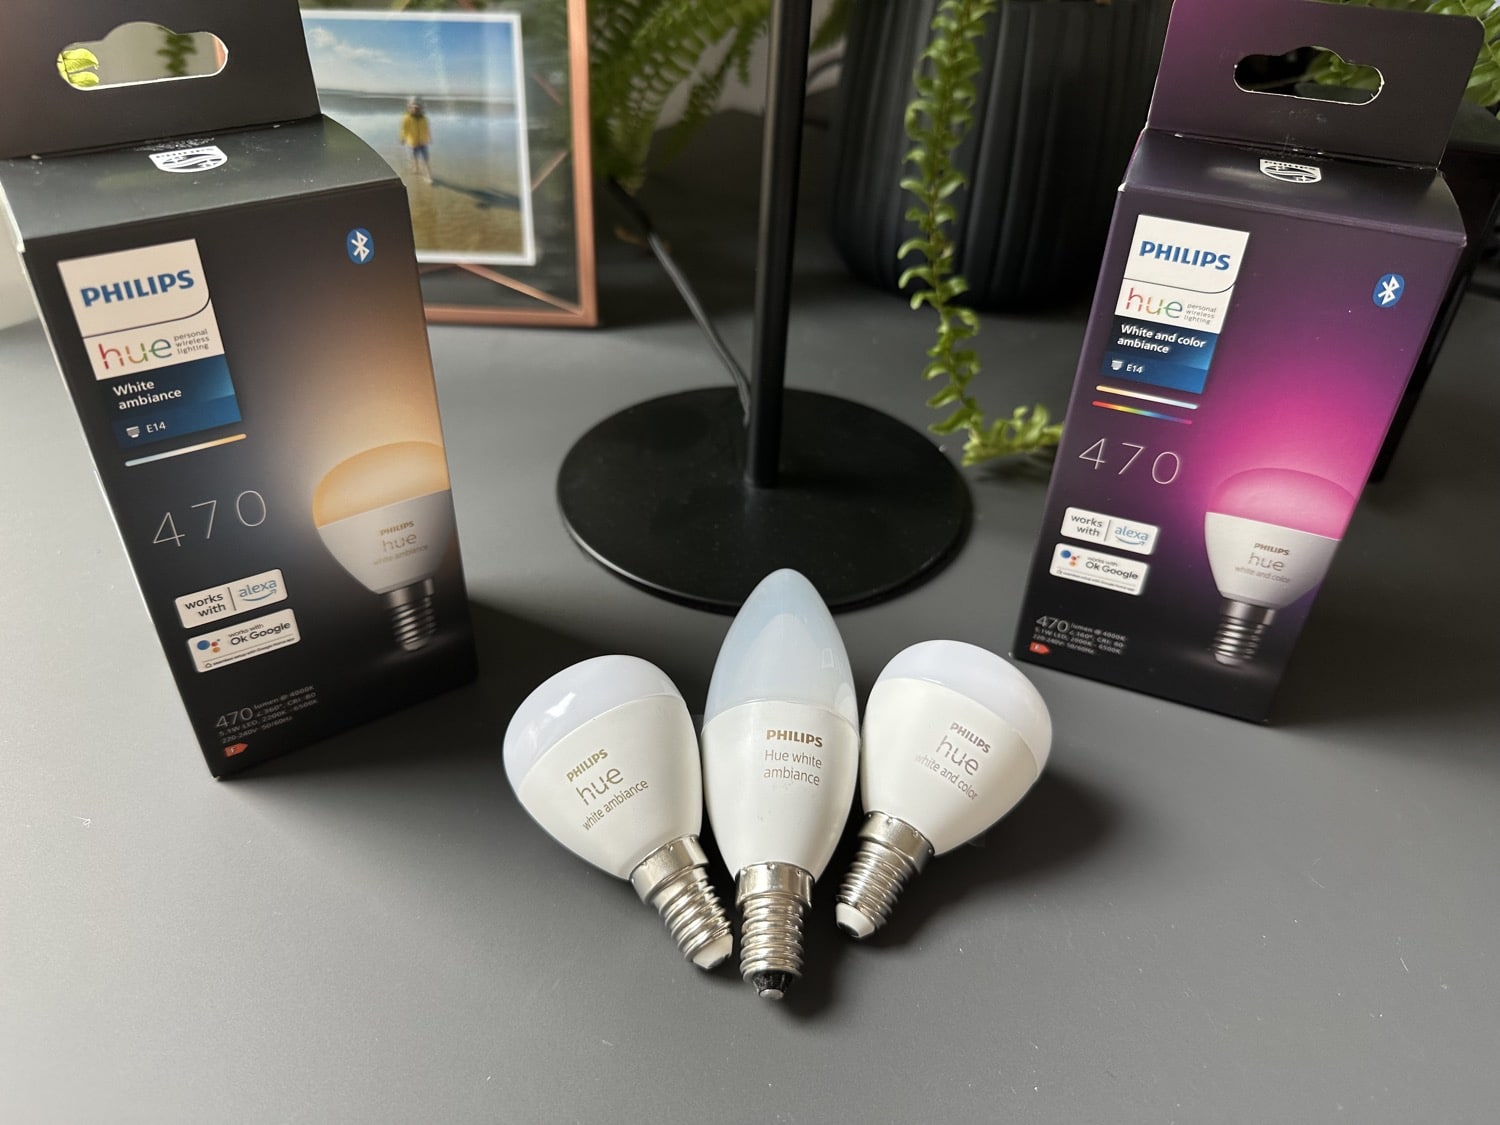 Hueblog: Unboxed: The new E14 drop-shaped light bulbs